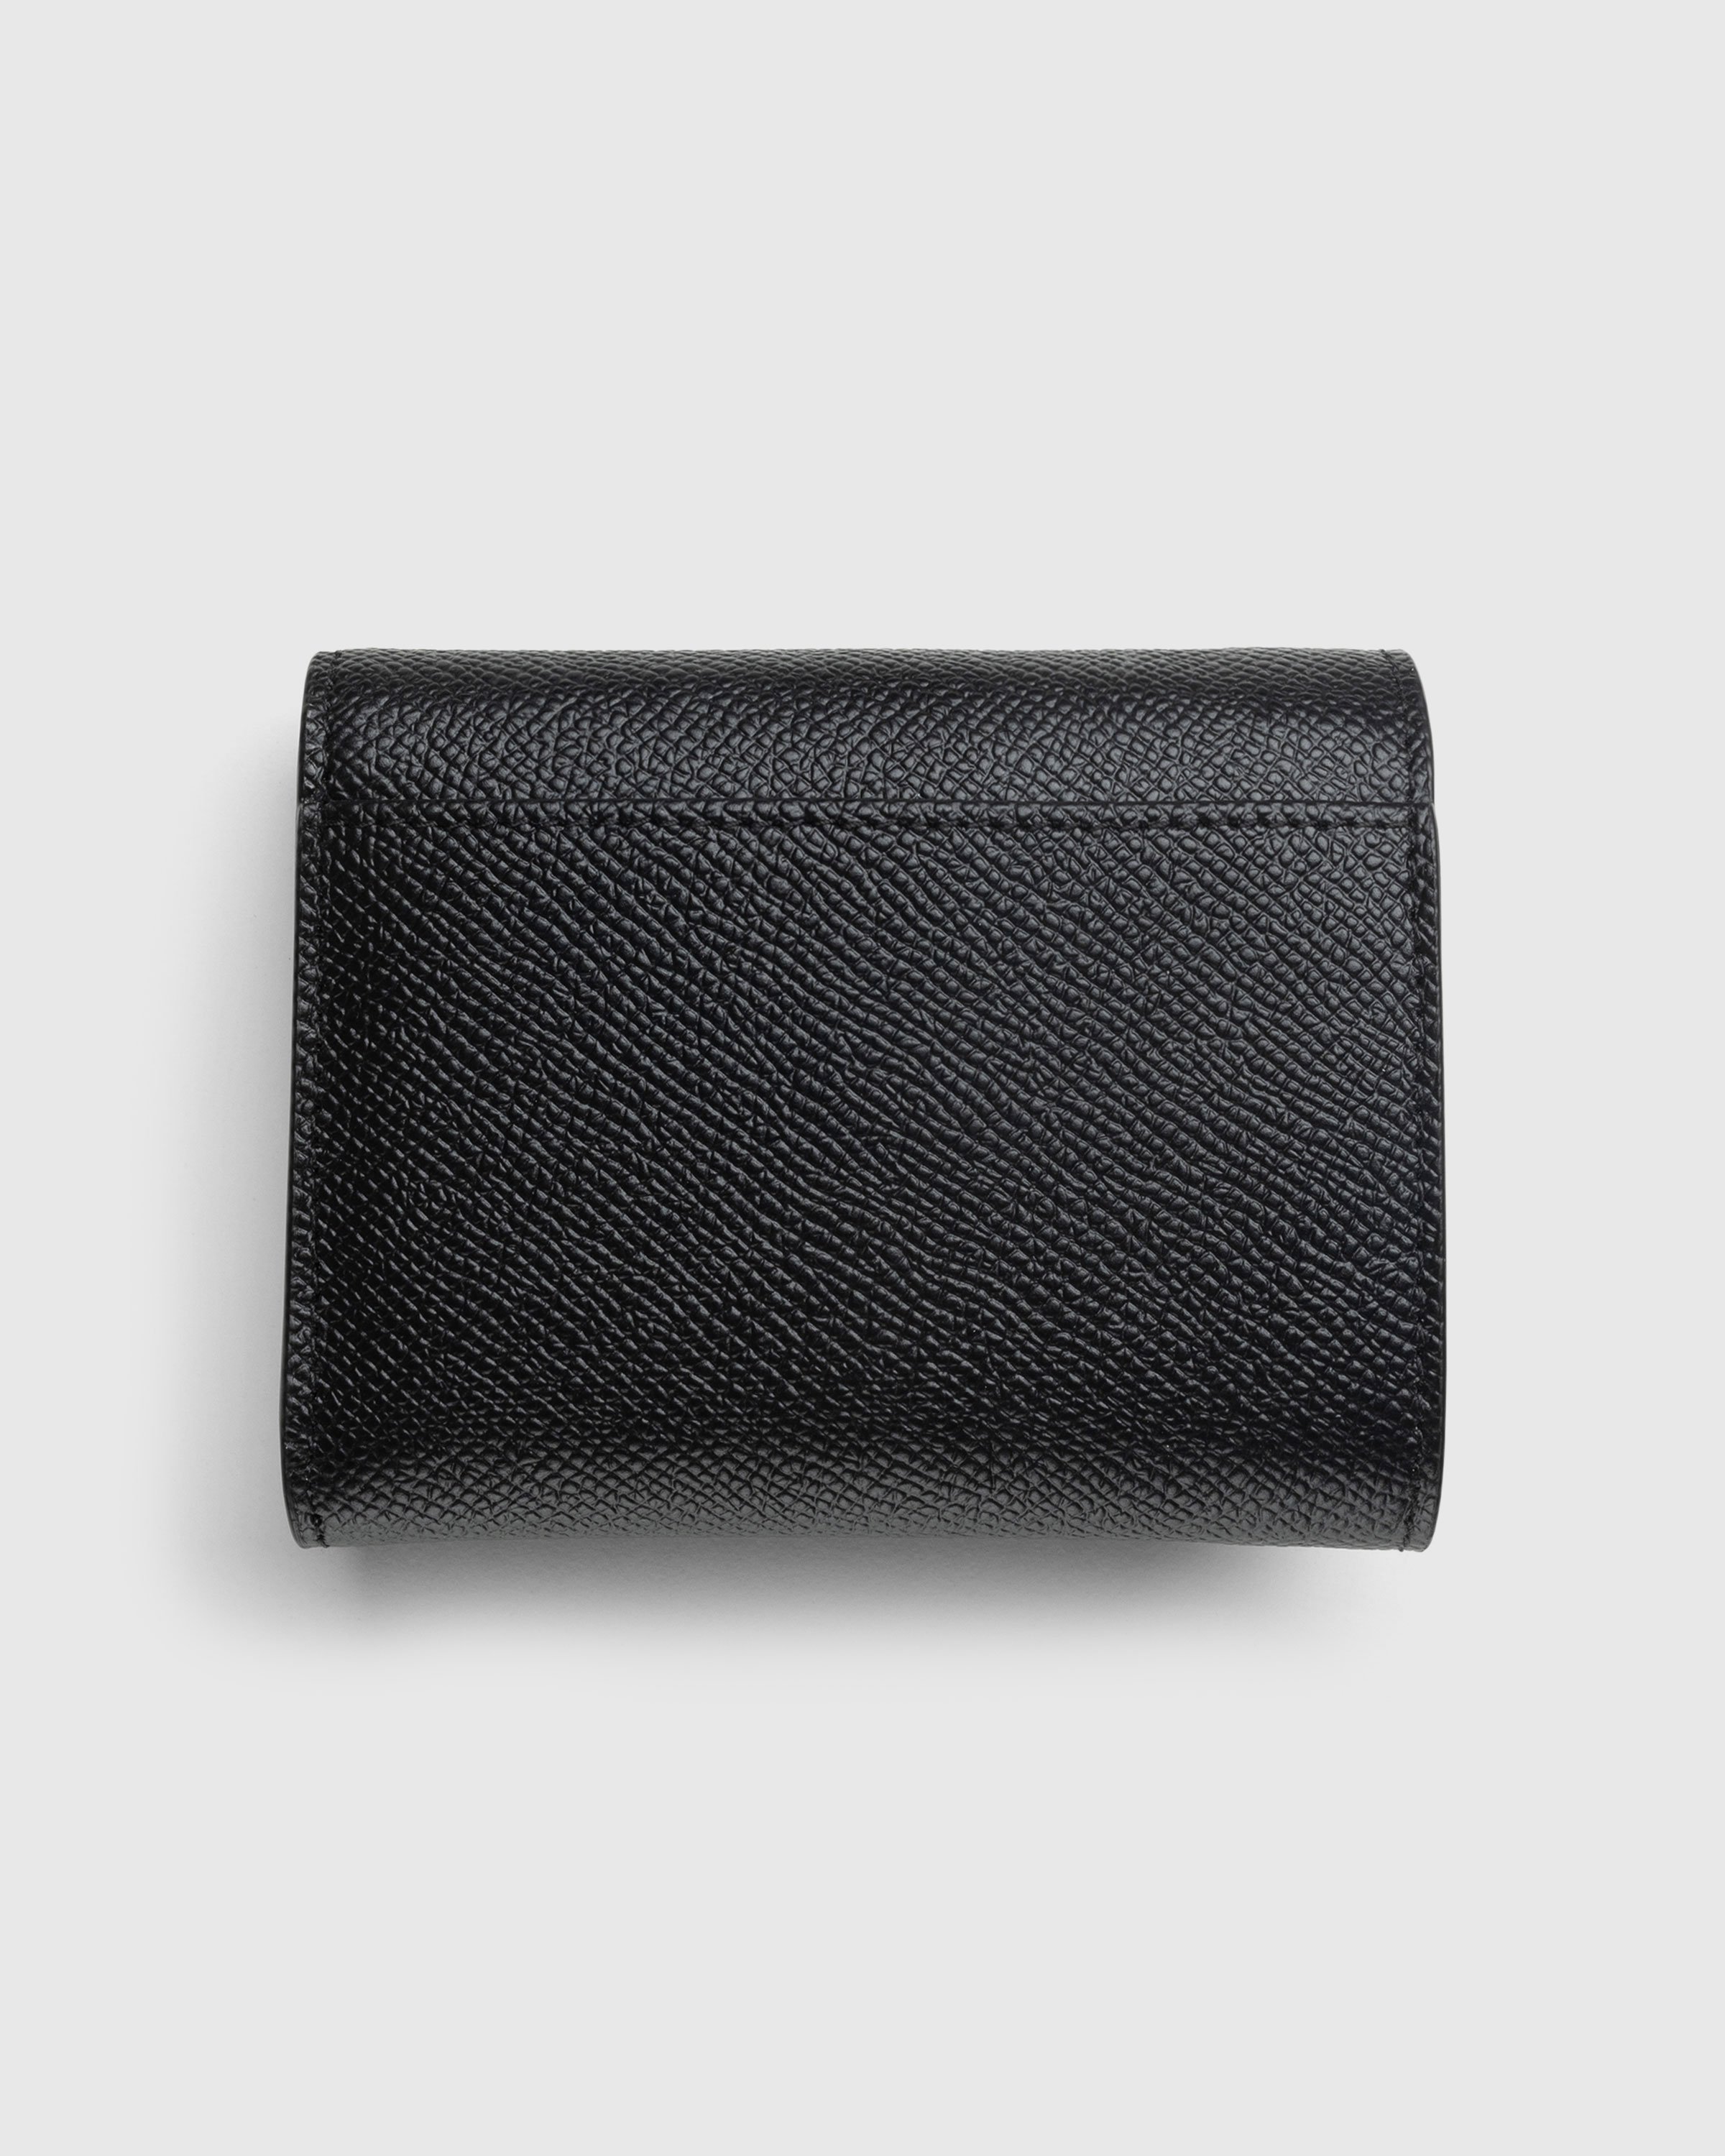 Maison Margiela - Tri-Fold Zip Wallet Black - Accessories - Black - Image 2